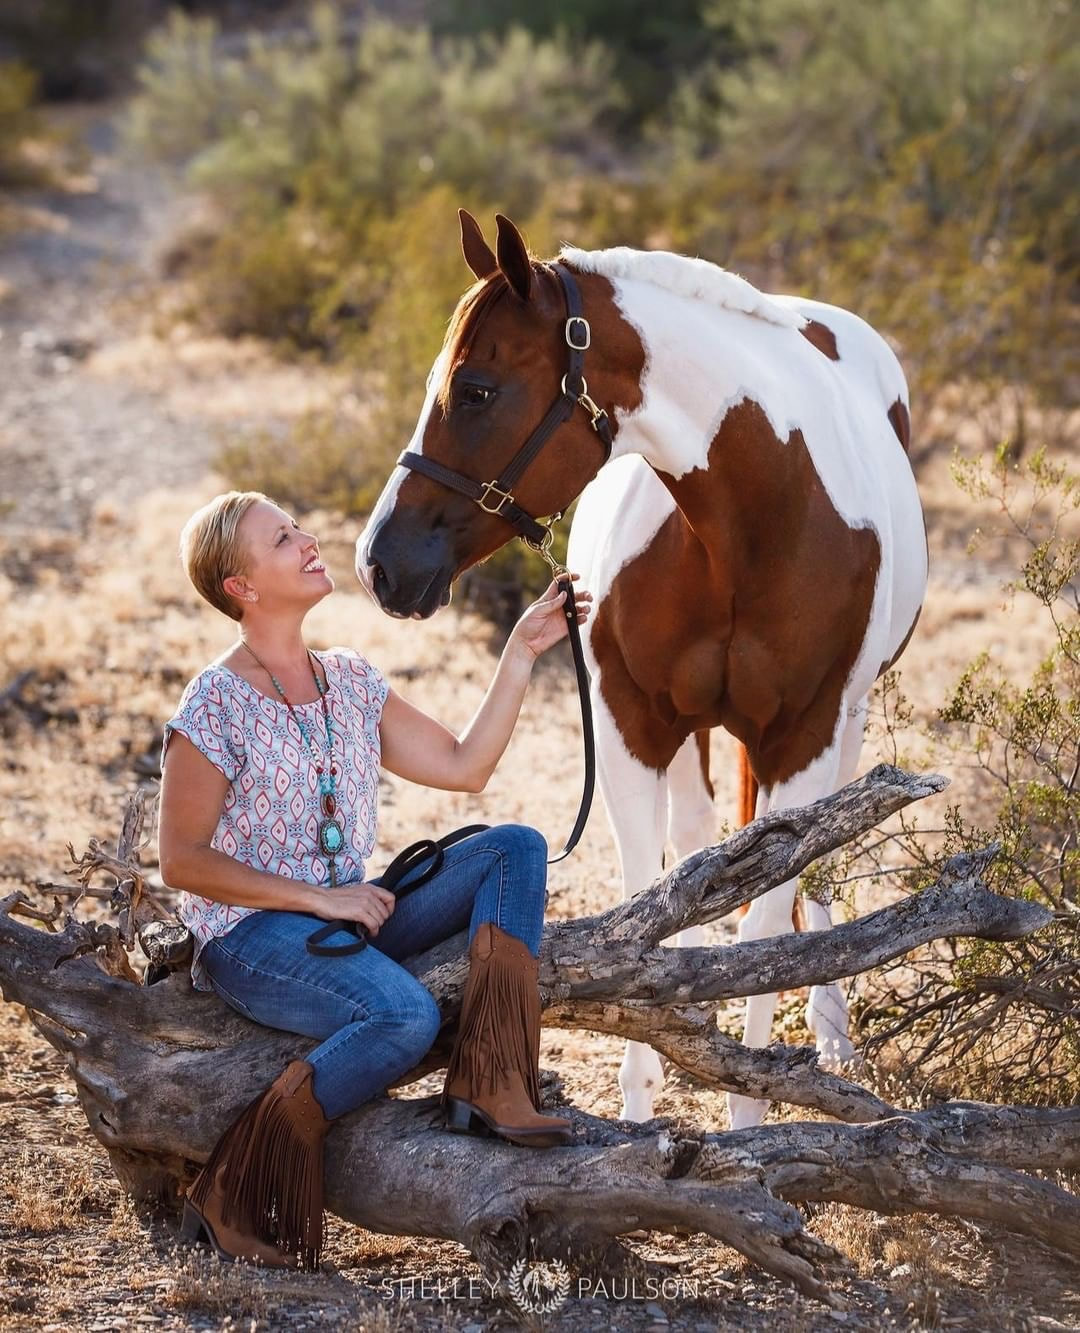 Carly Kade, Author and Host of the Equestrian Author Spotlight Podcast